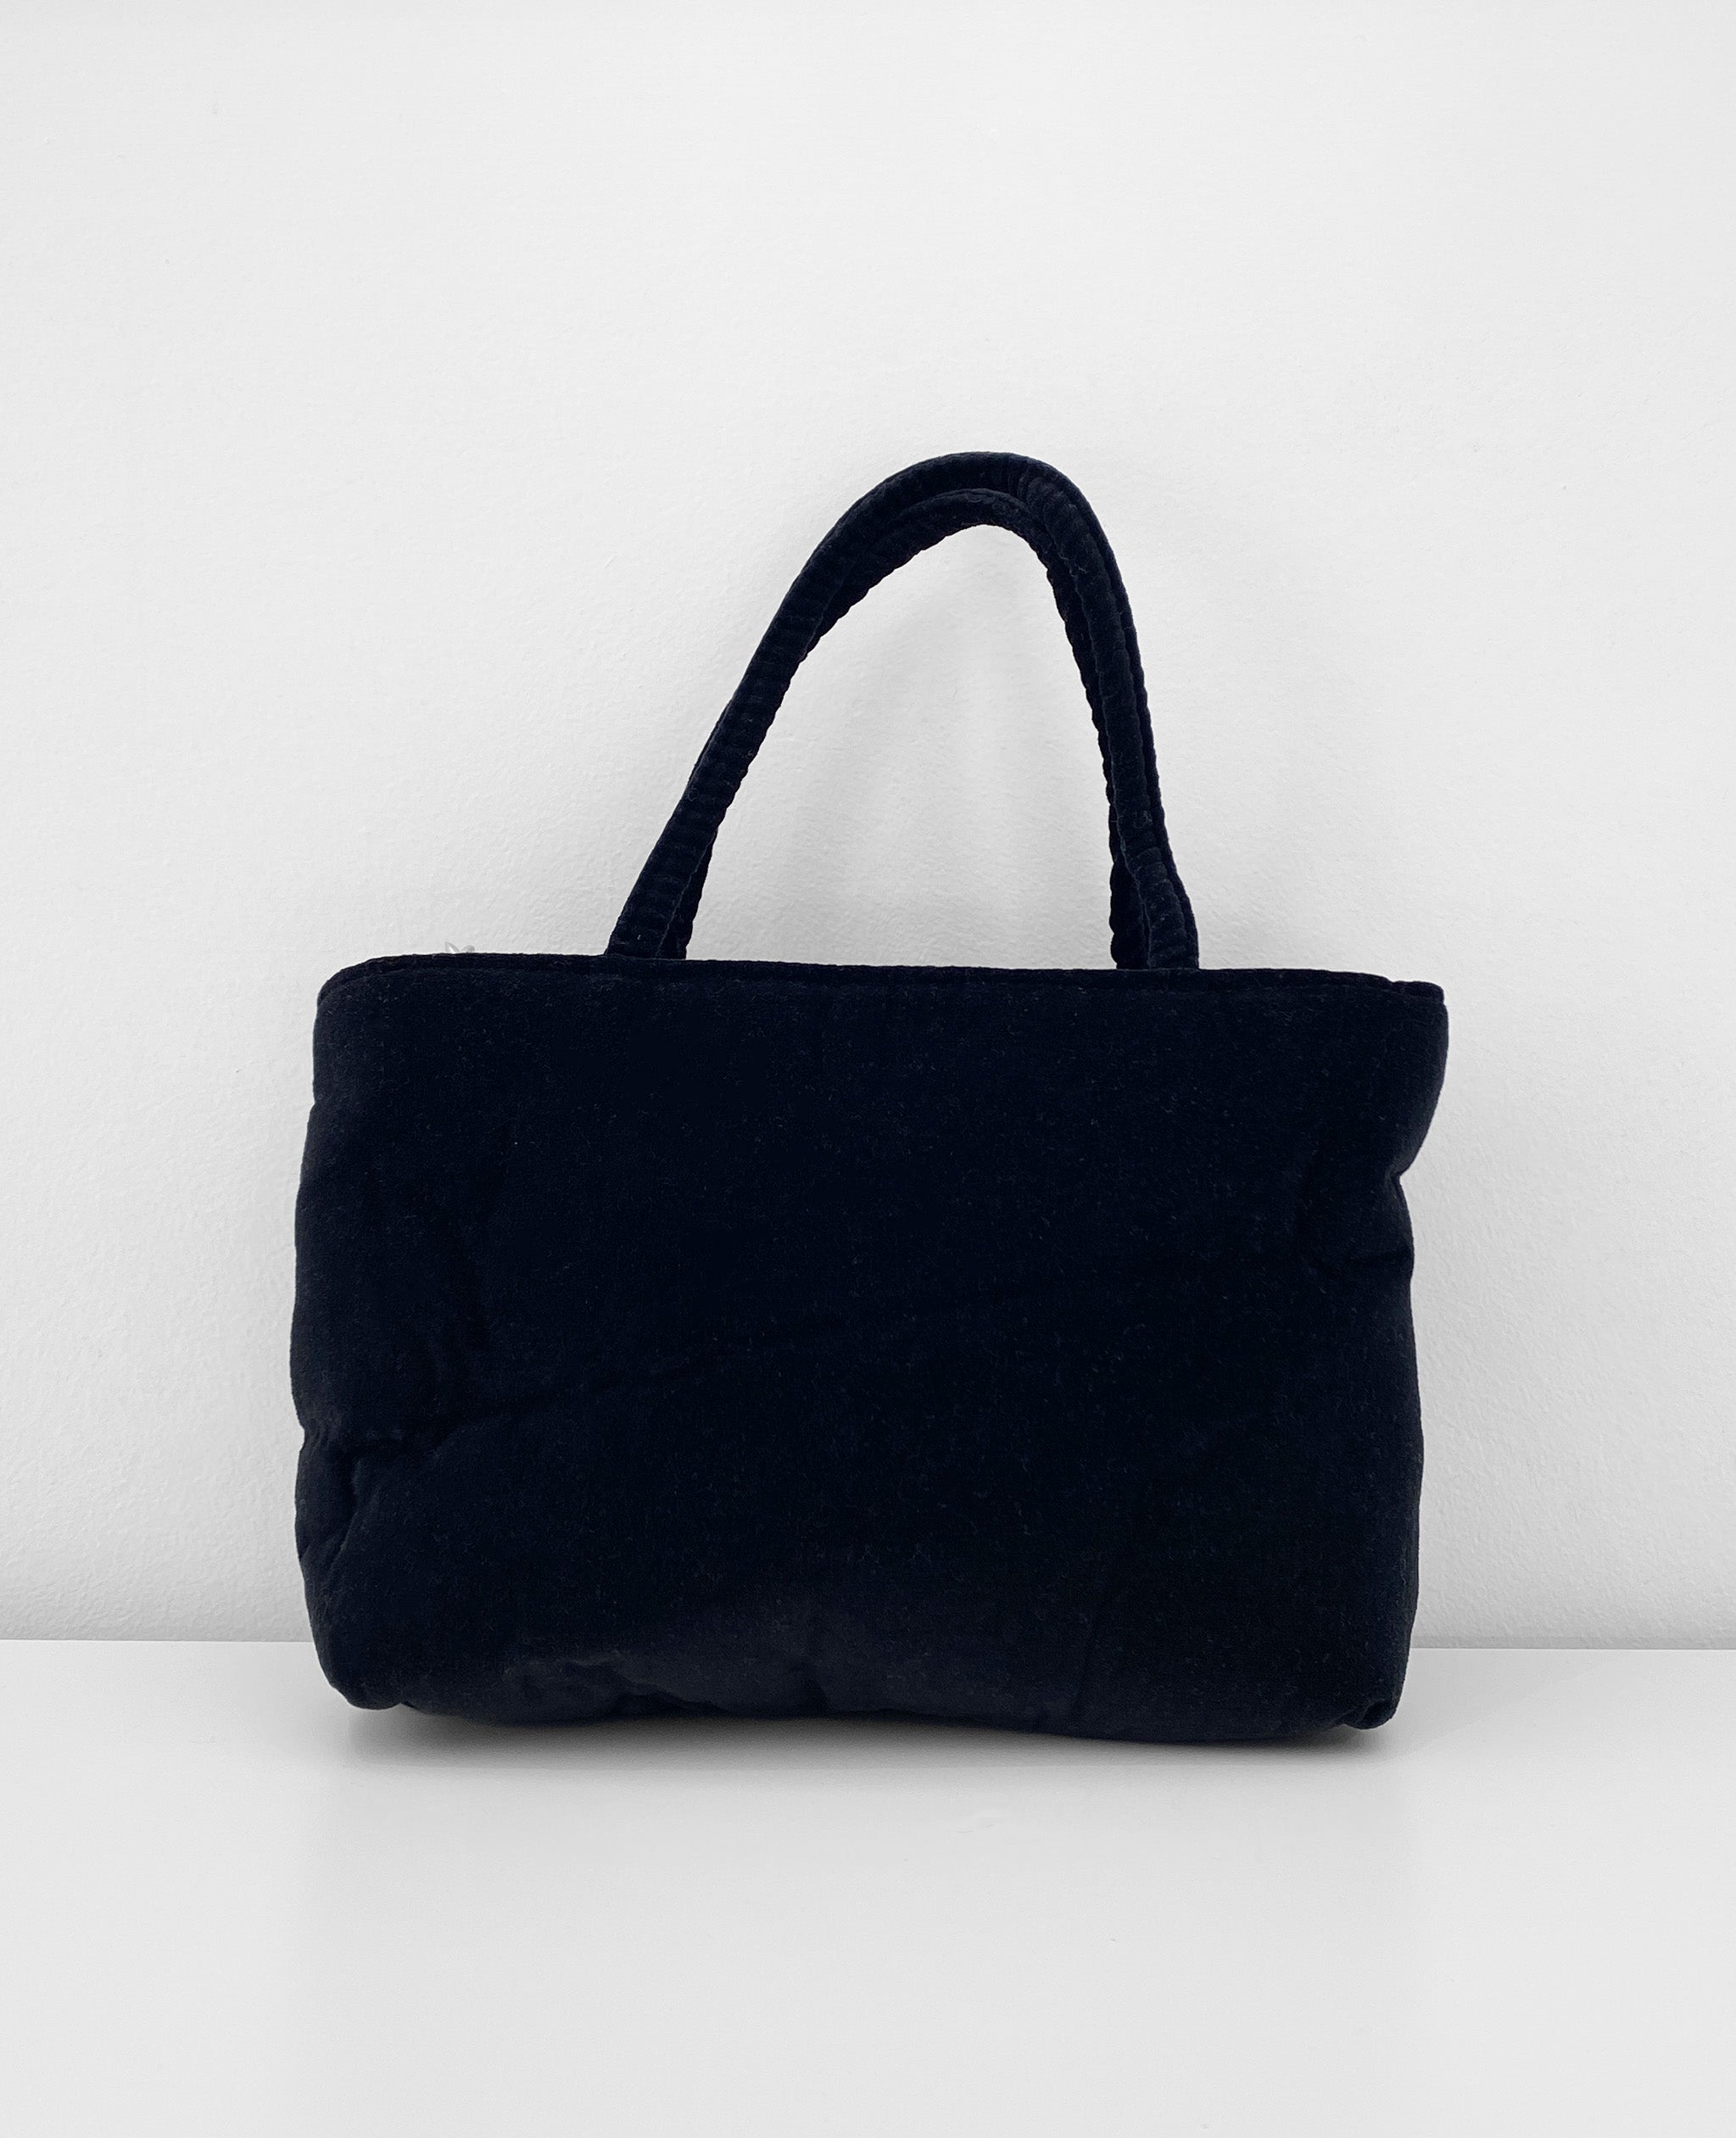 Black Velvet Floral Bag